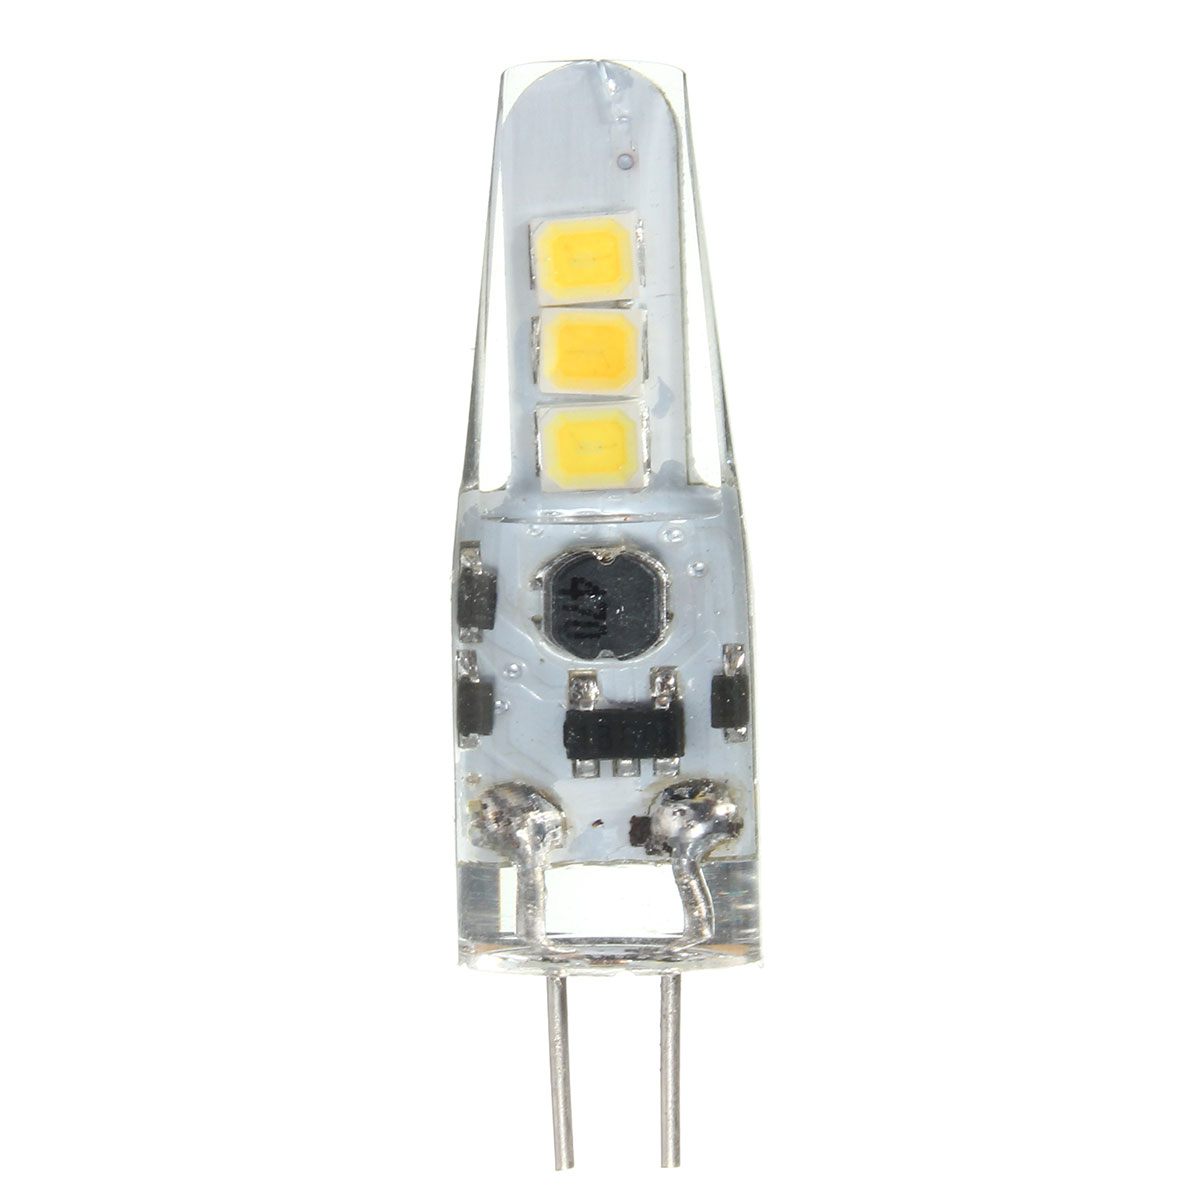 Mini-G4-LED-Corn-Bulb-2W-6-SMD-2835-Silicone-Crystal-Lamp-Light-DC12V-1065960-9